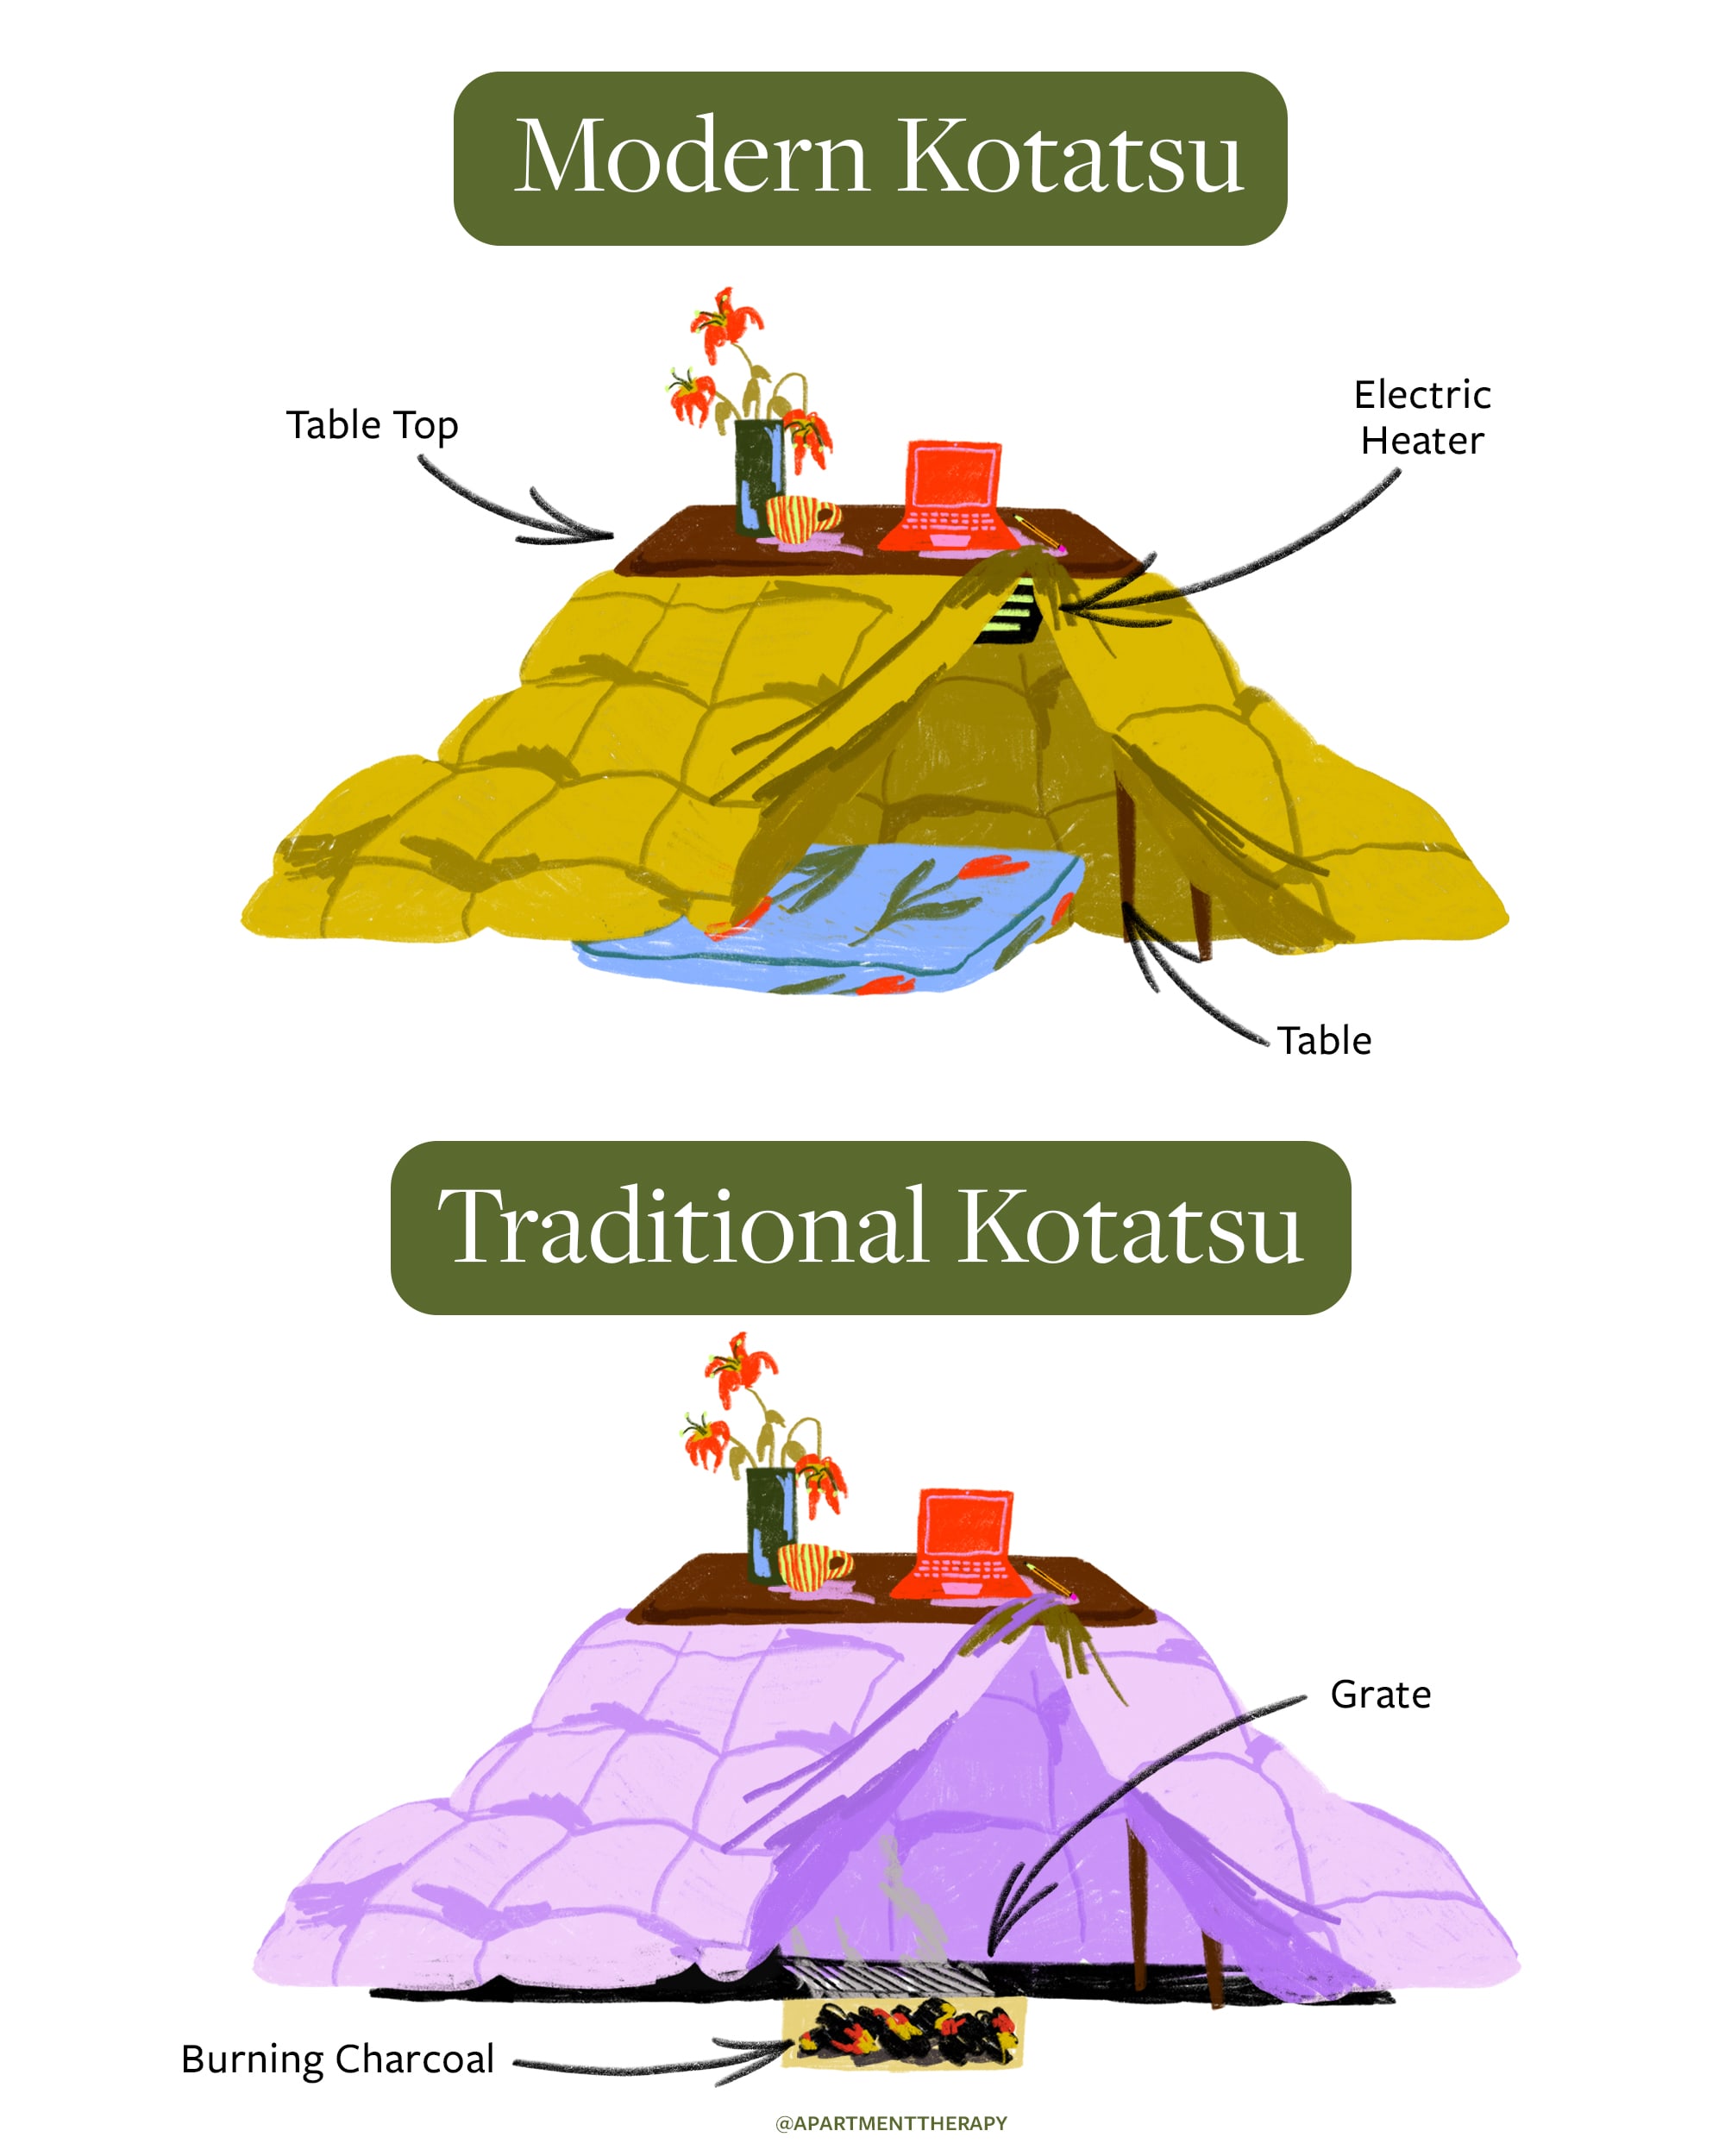 What Is a Kotatsu?